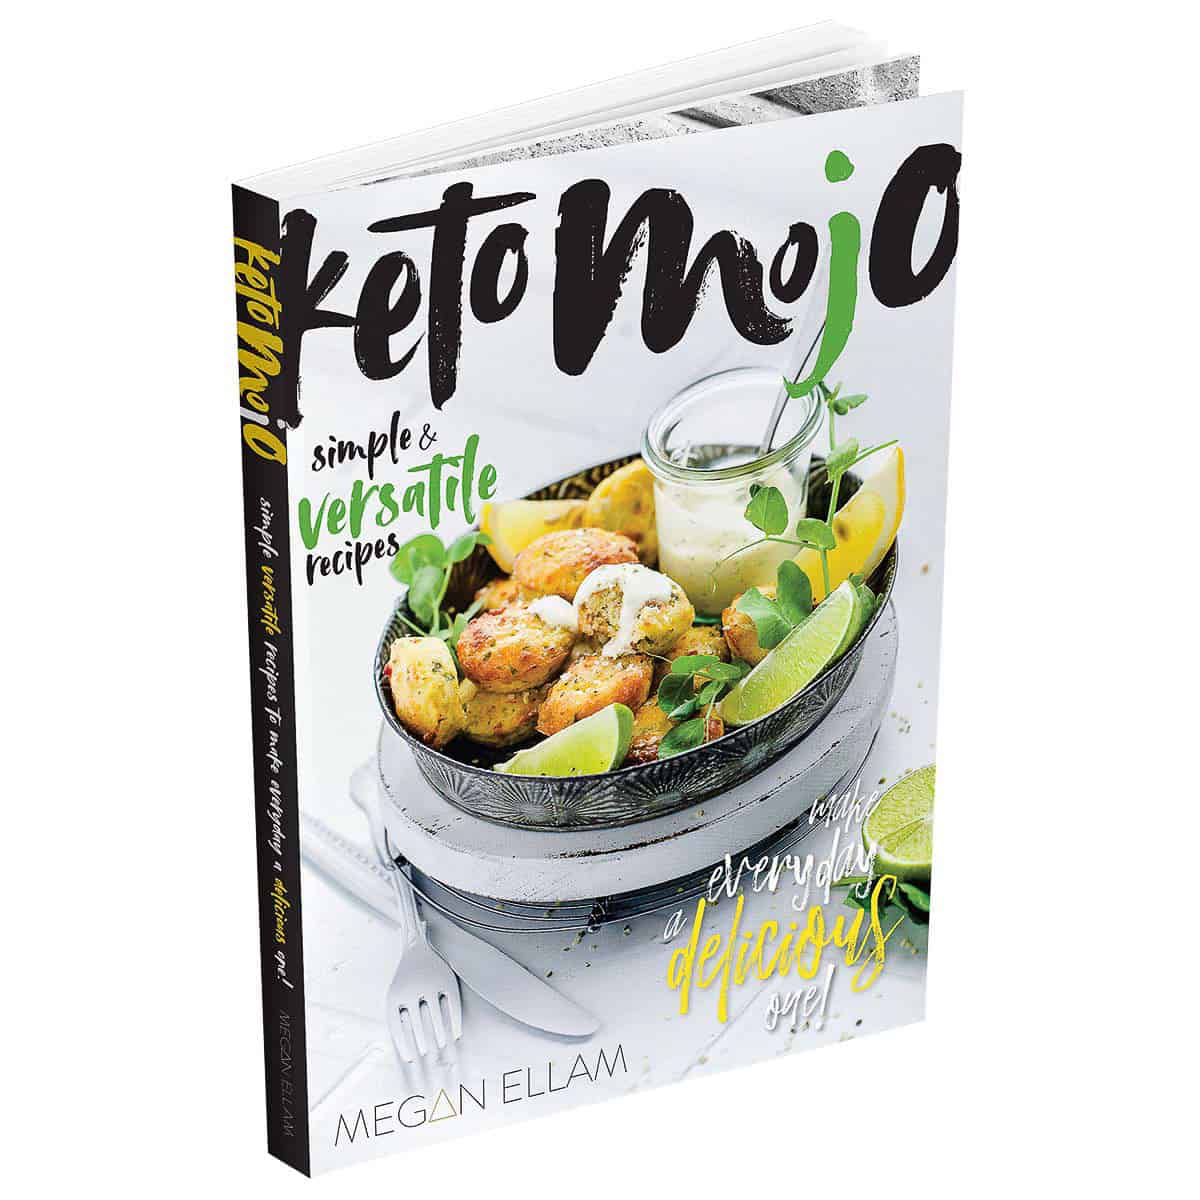 Keto Mojo Cookbook book cover.